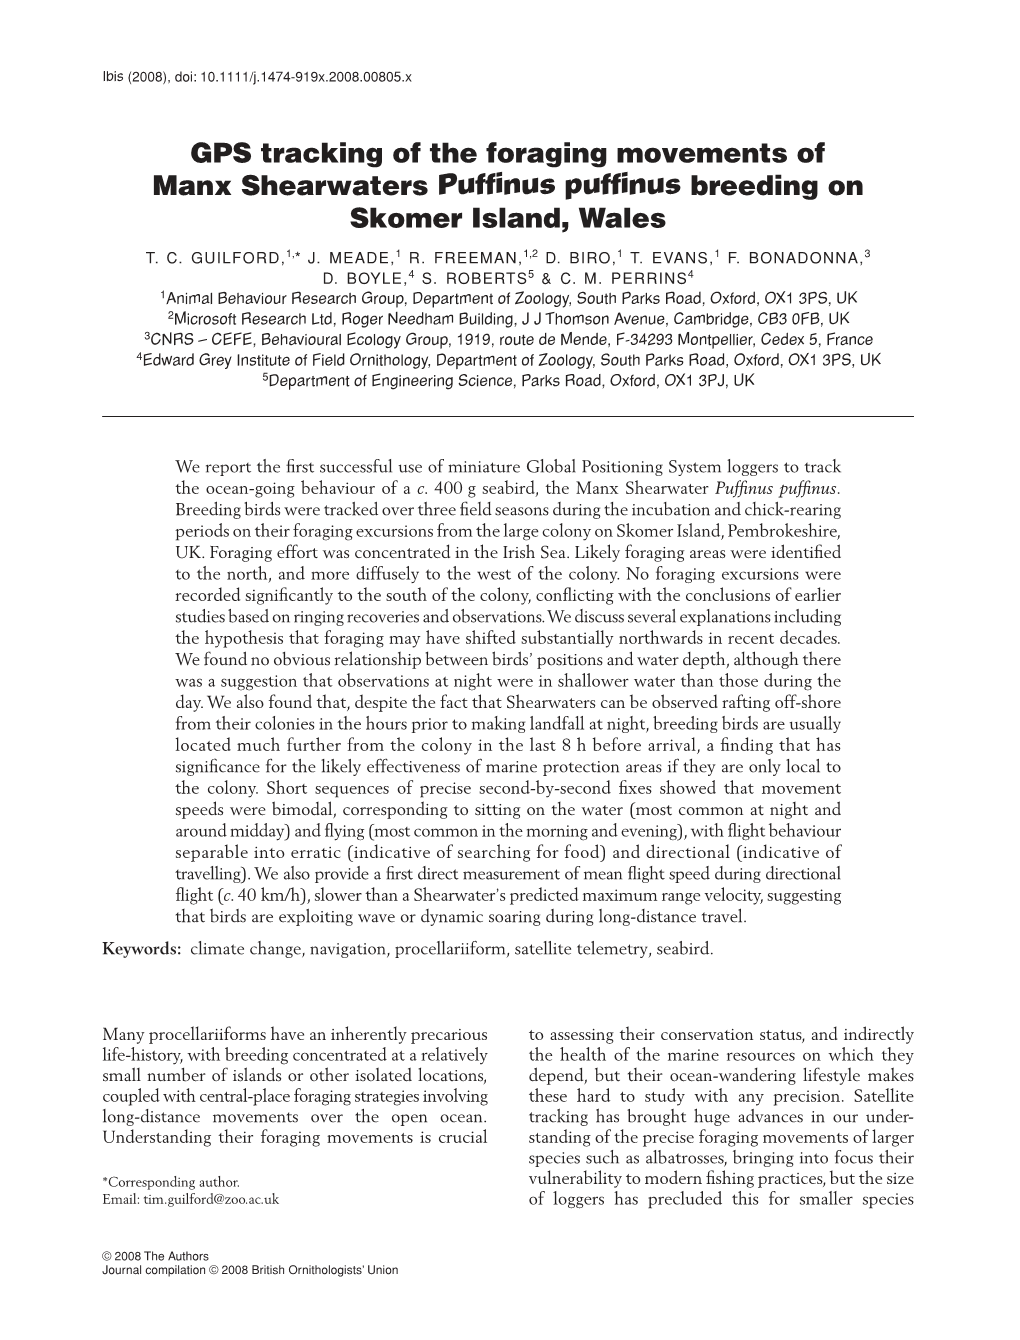 GPS Tracking of the Foraging Movements of Manx Shearwaters Pufﬁnus Pufﬁnus Breeding on Skomer Island, Wales